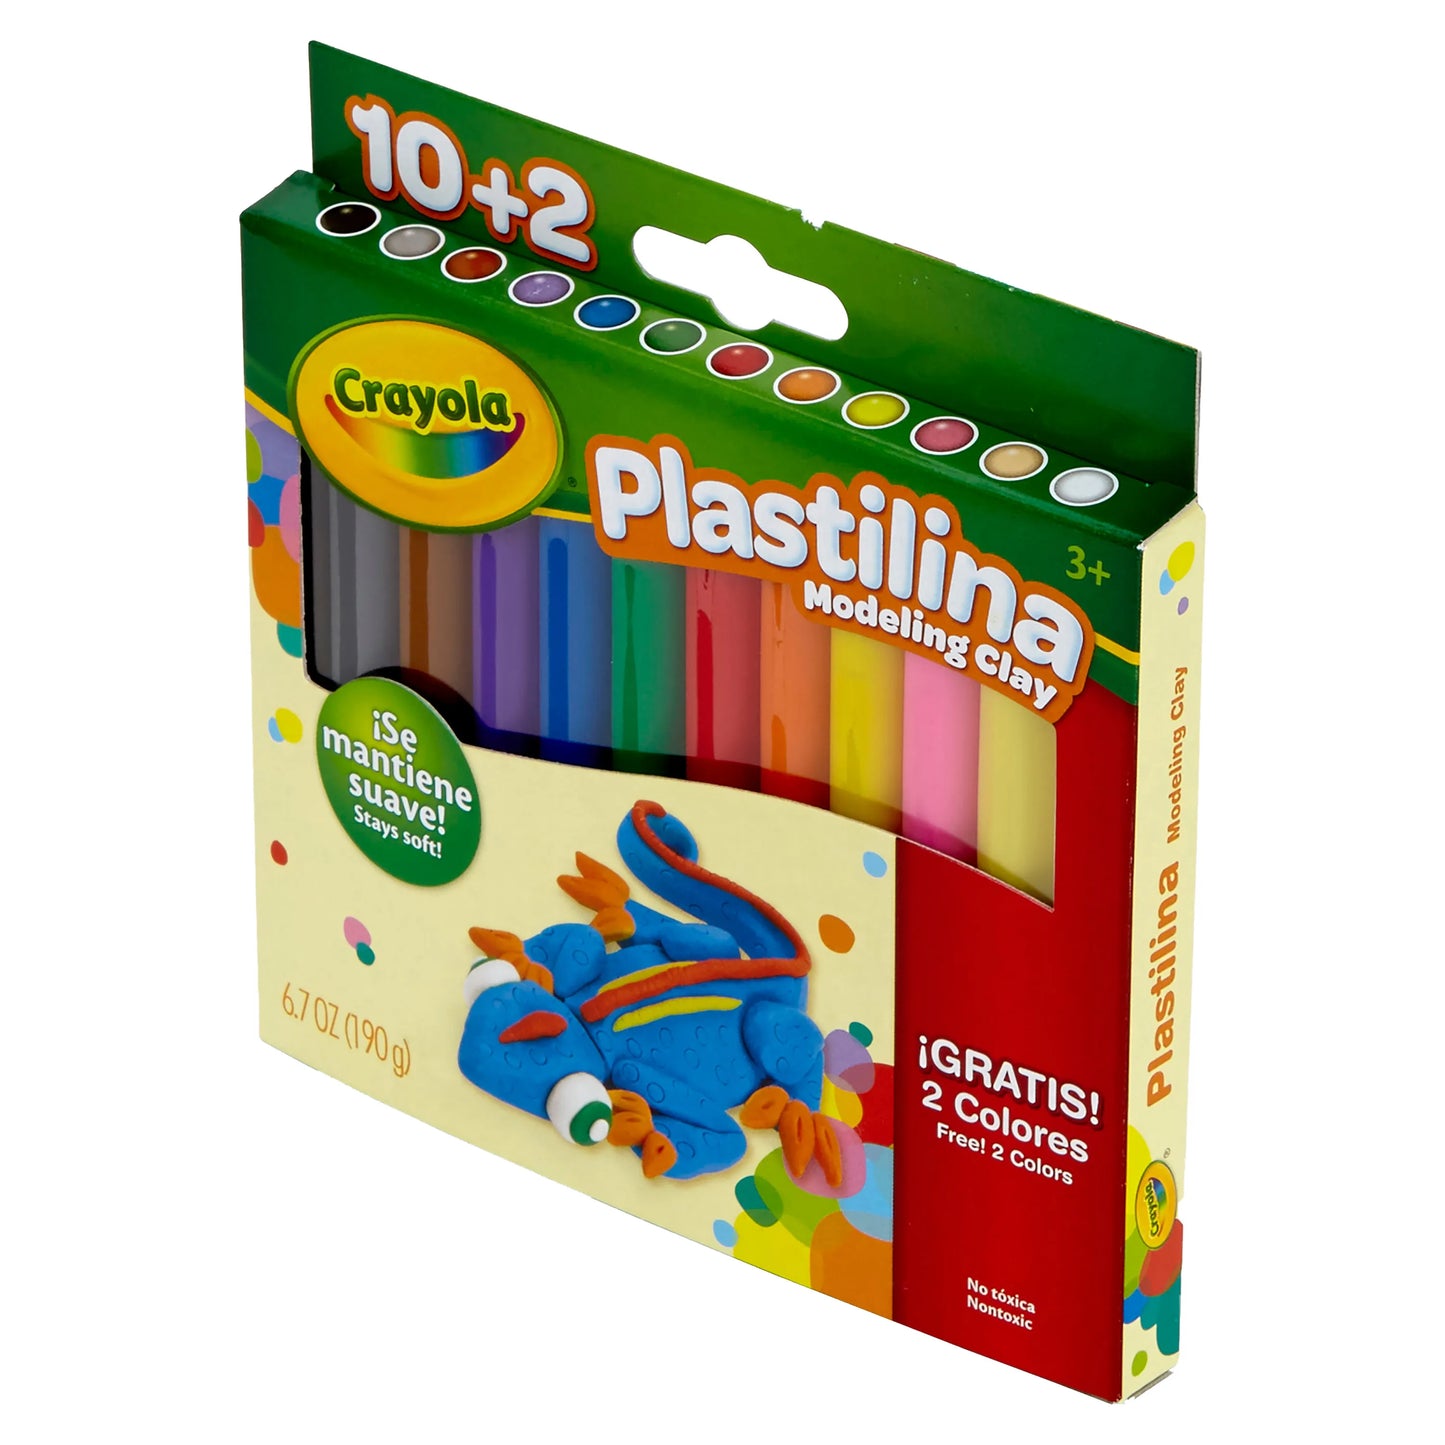 Crayola Plastilina Modelling Clay (12 count)